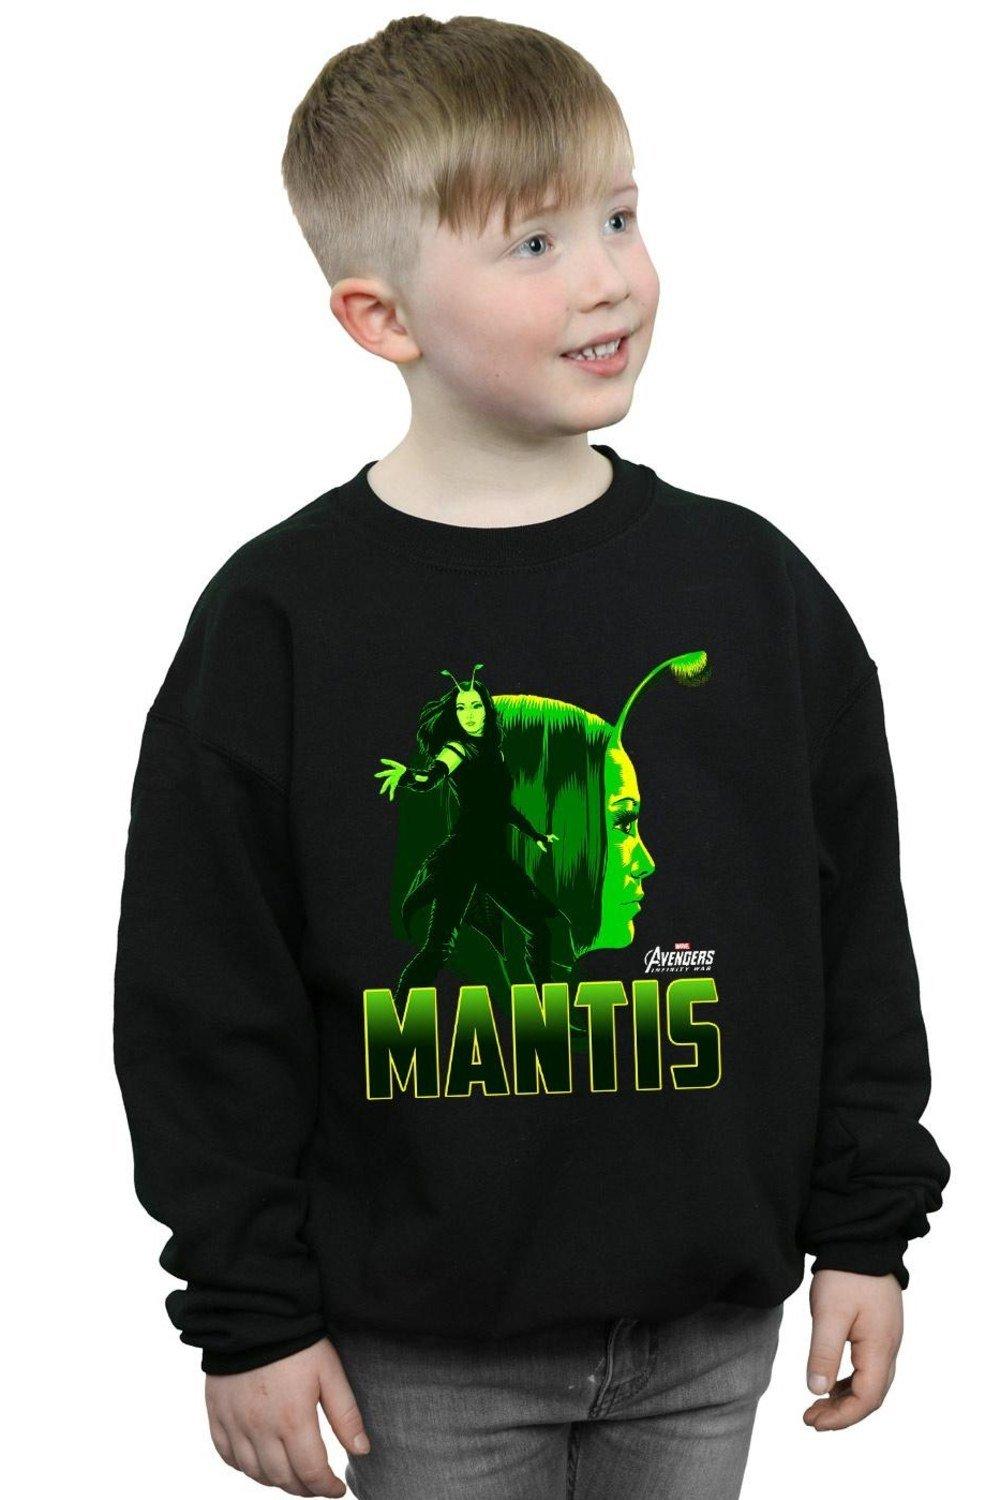 Avengers Infinity War Mantis Character Sweatshirt